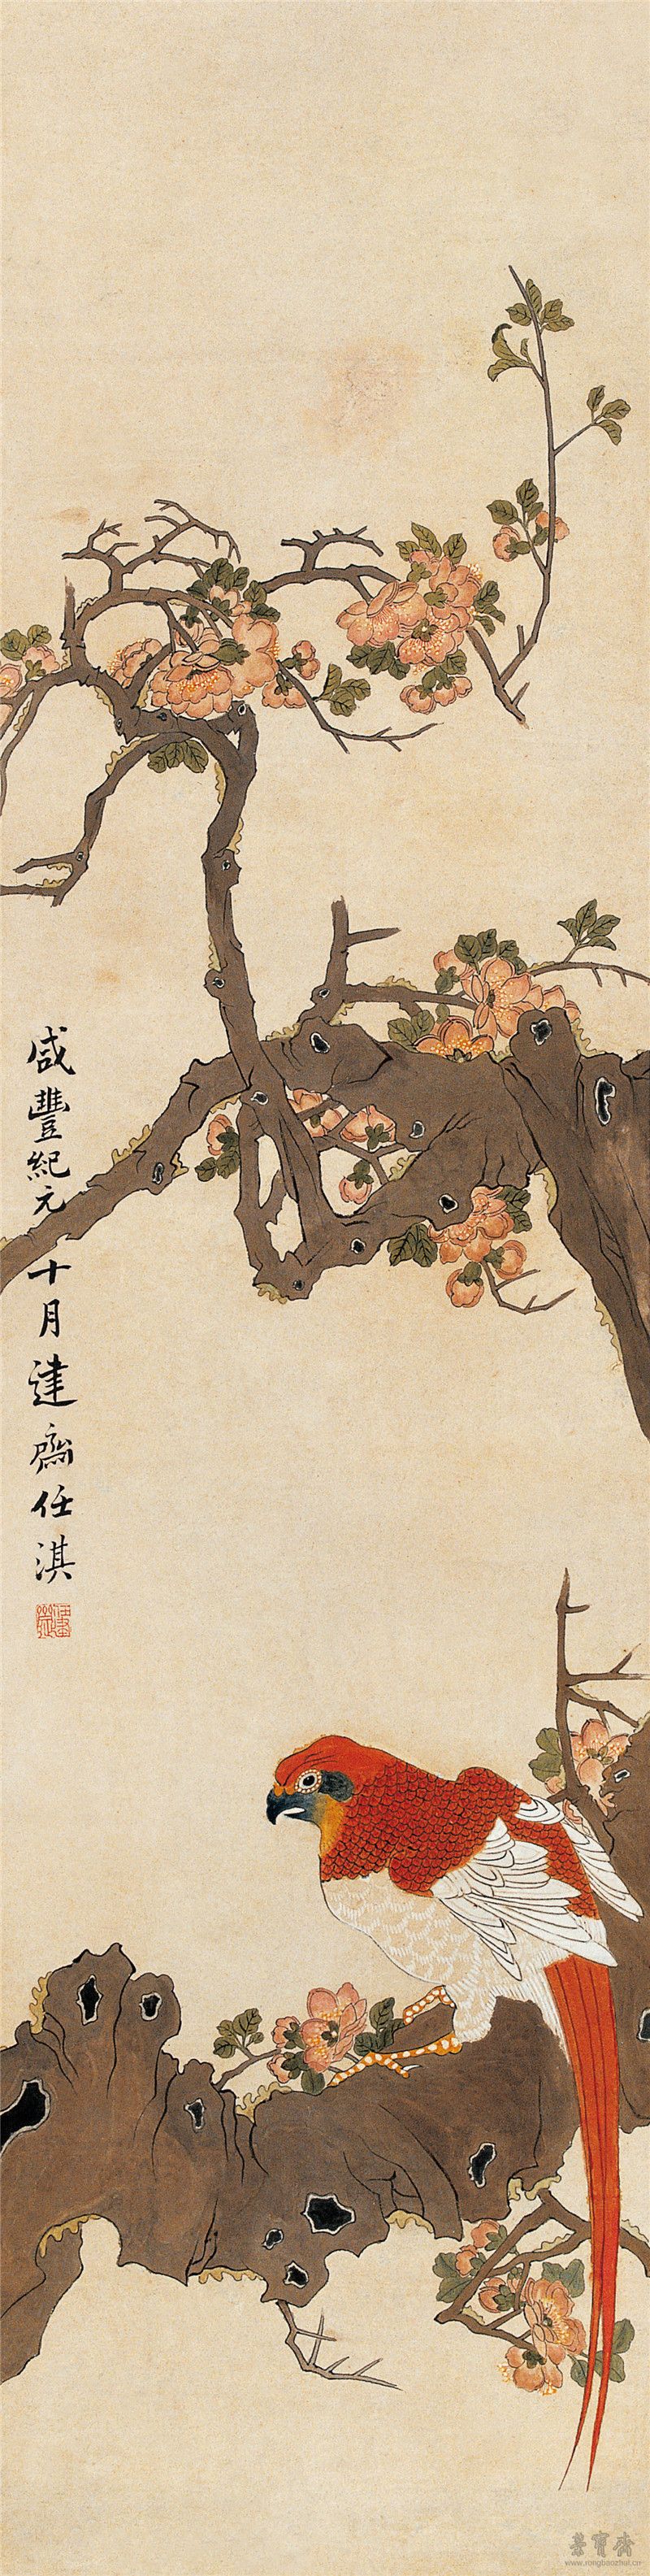 任淇《桃花鹦鹉》122.4cm×30cm 1851年